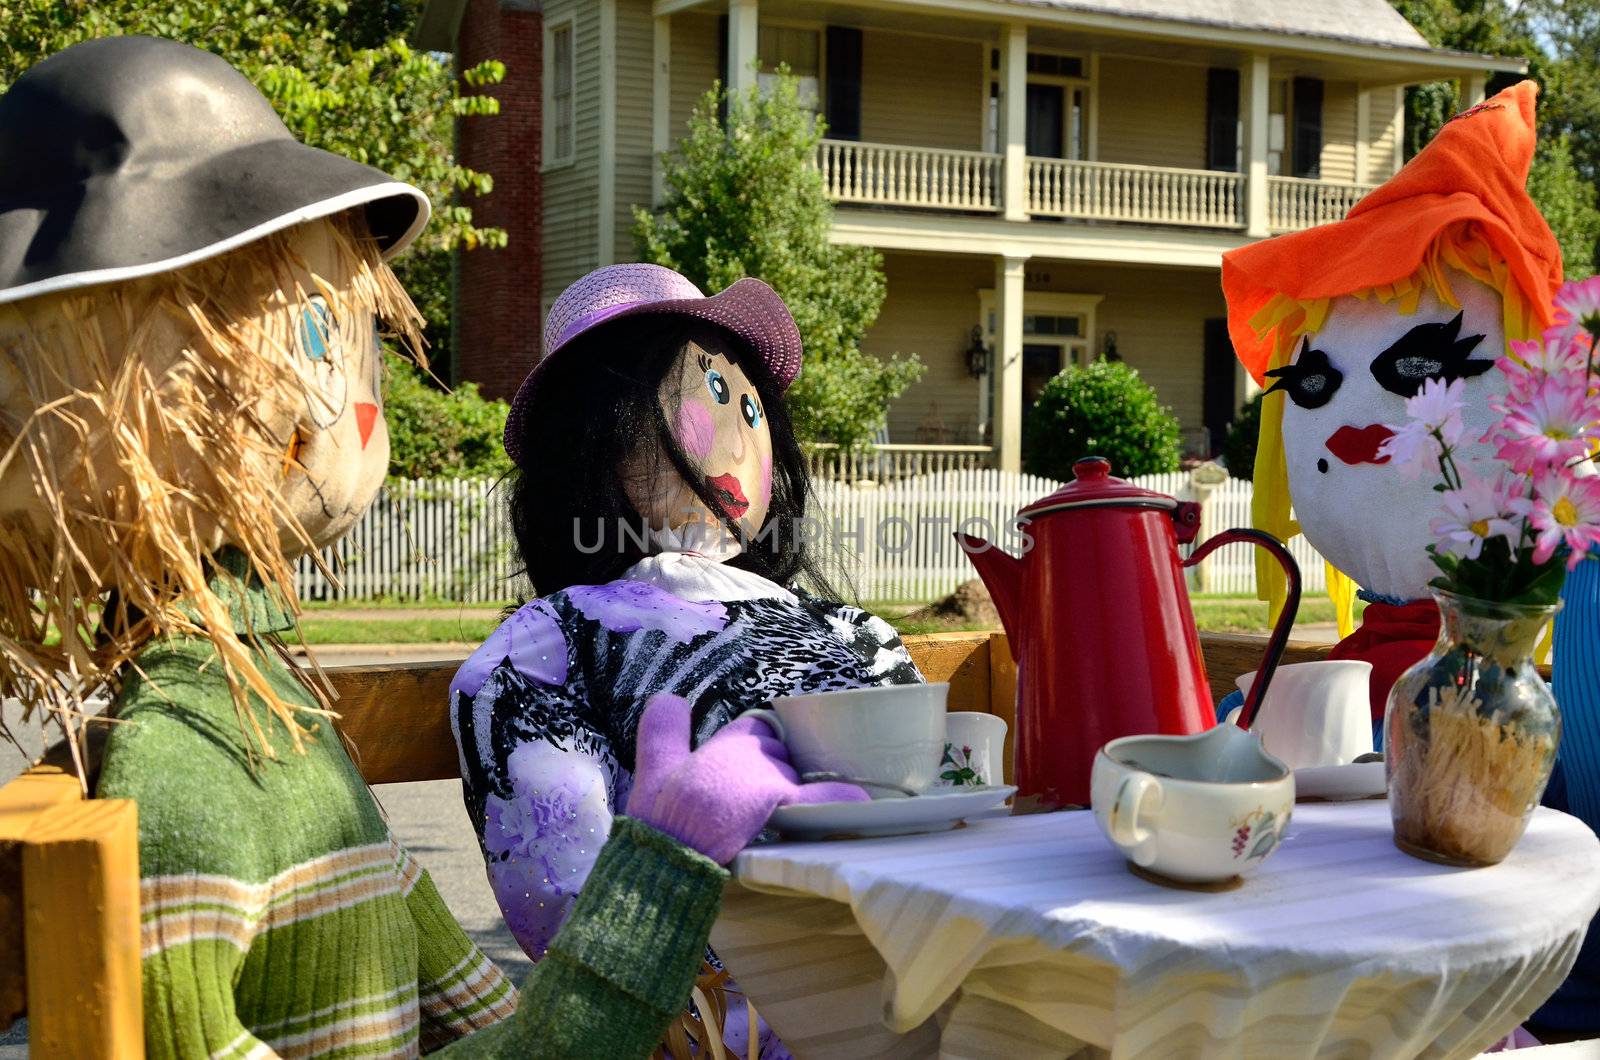 A tea party of scarecrows can be seen along Osborne Street in Saint Marys Georgia